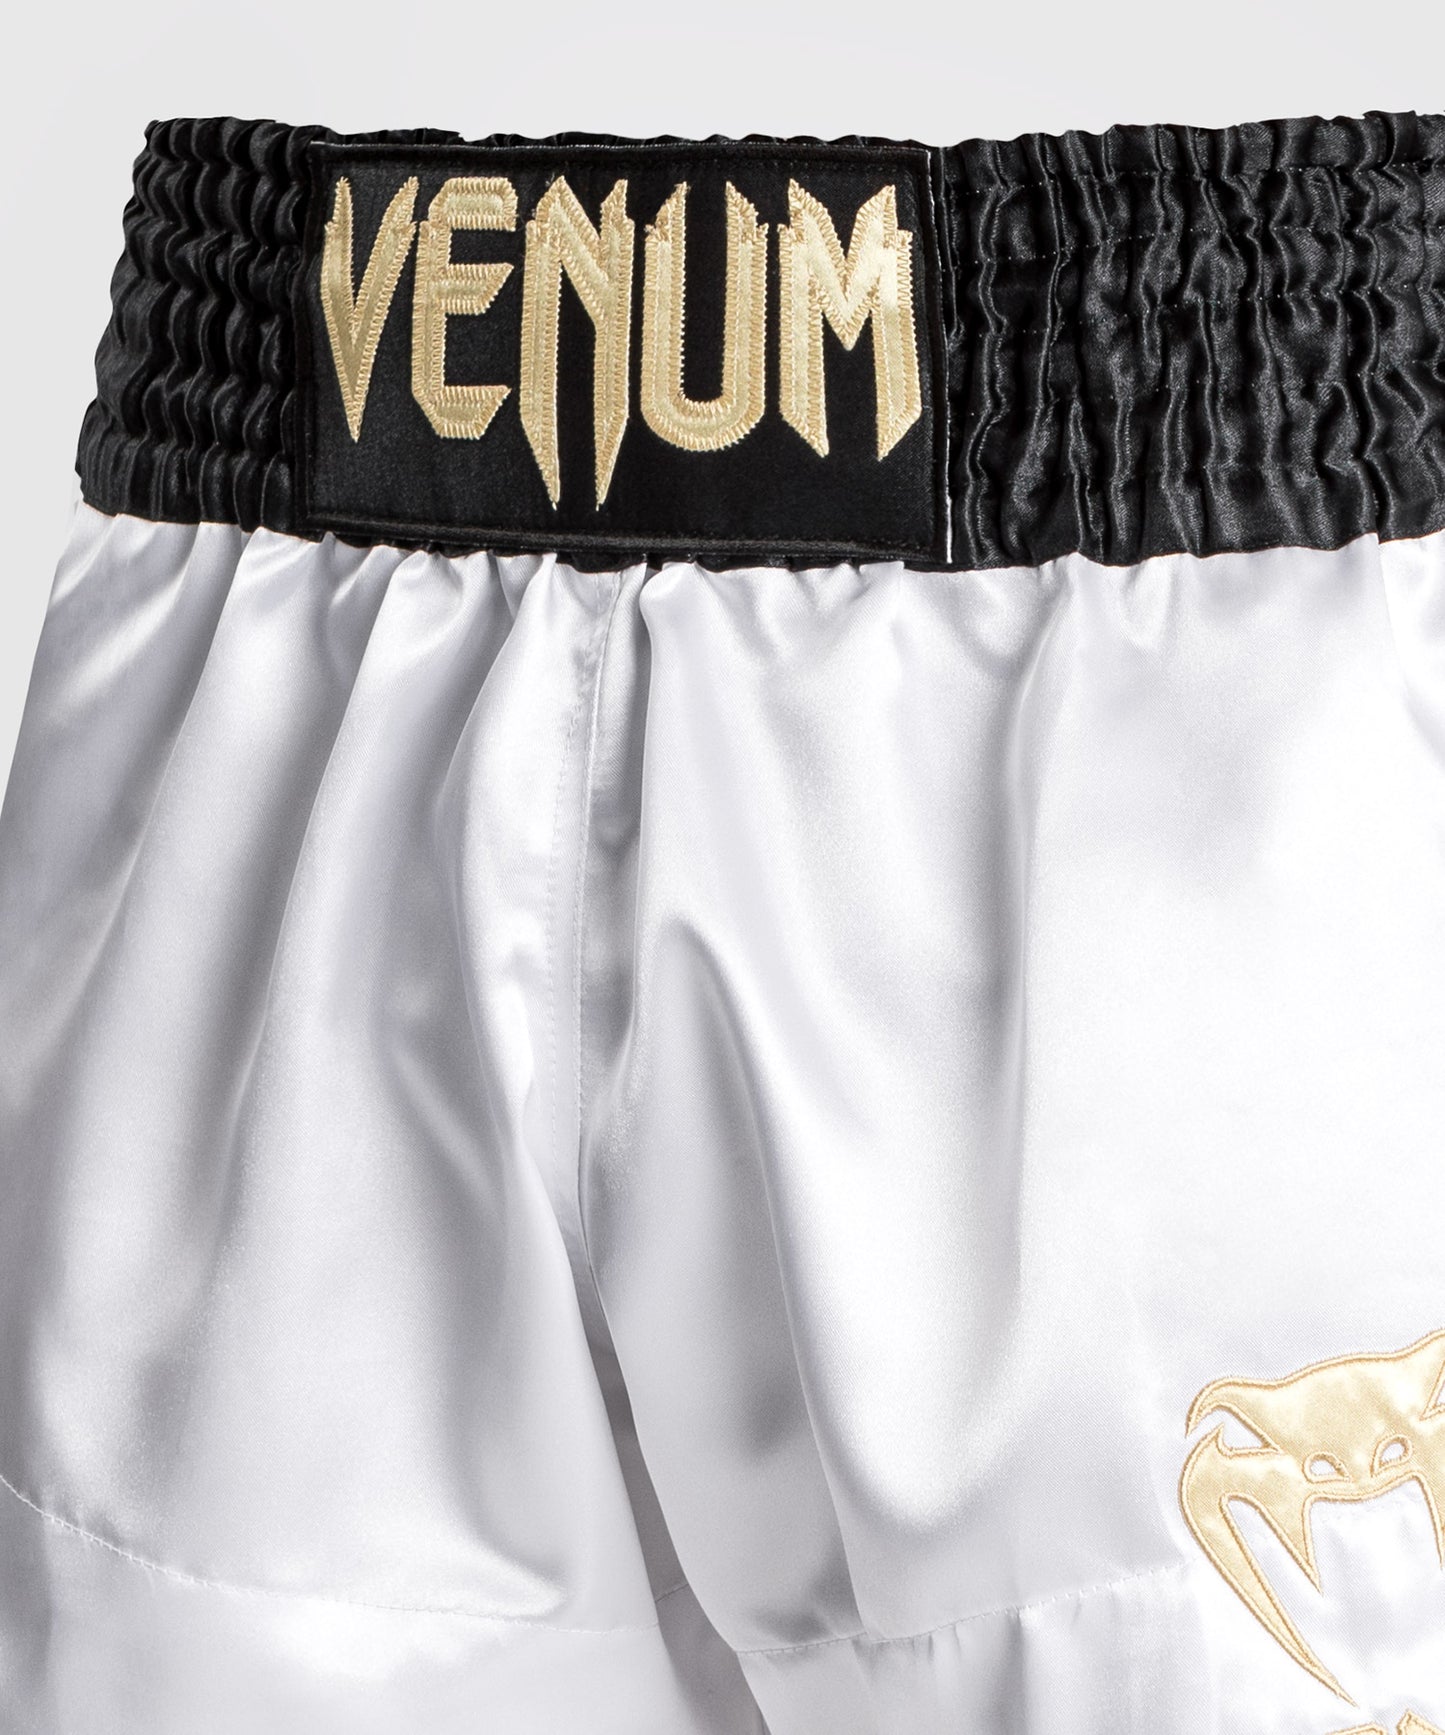 Venum Classic Muay Thai Short - White/Gold/Black